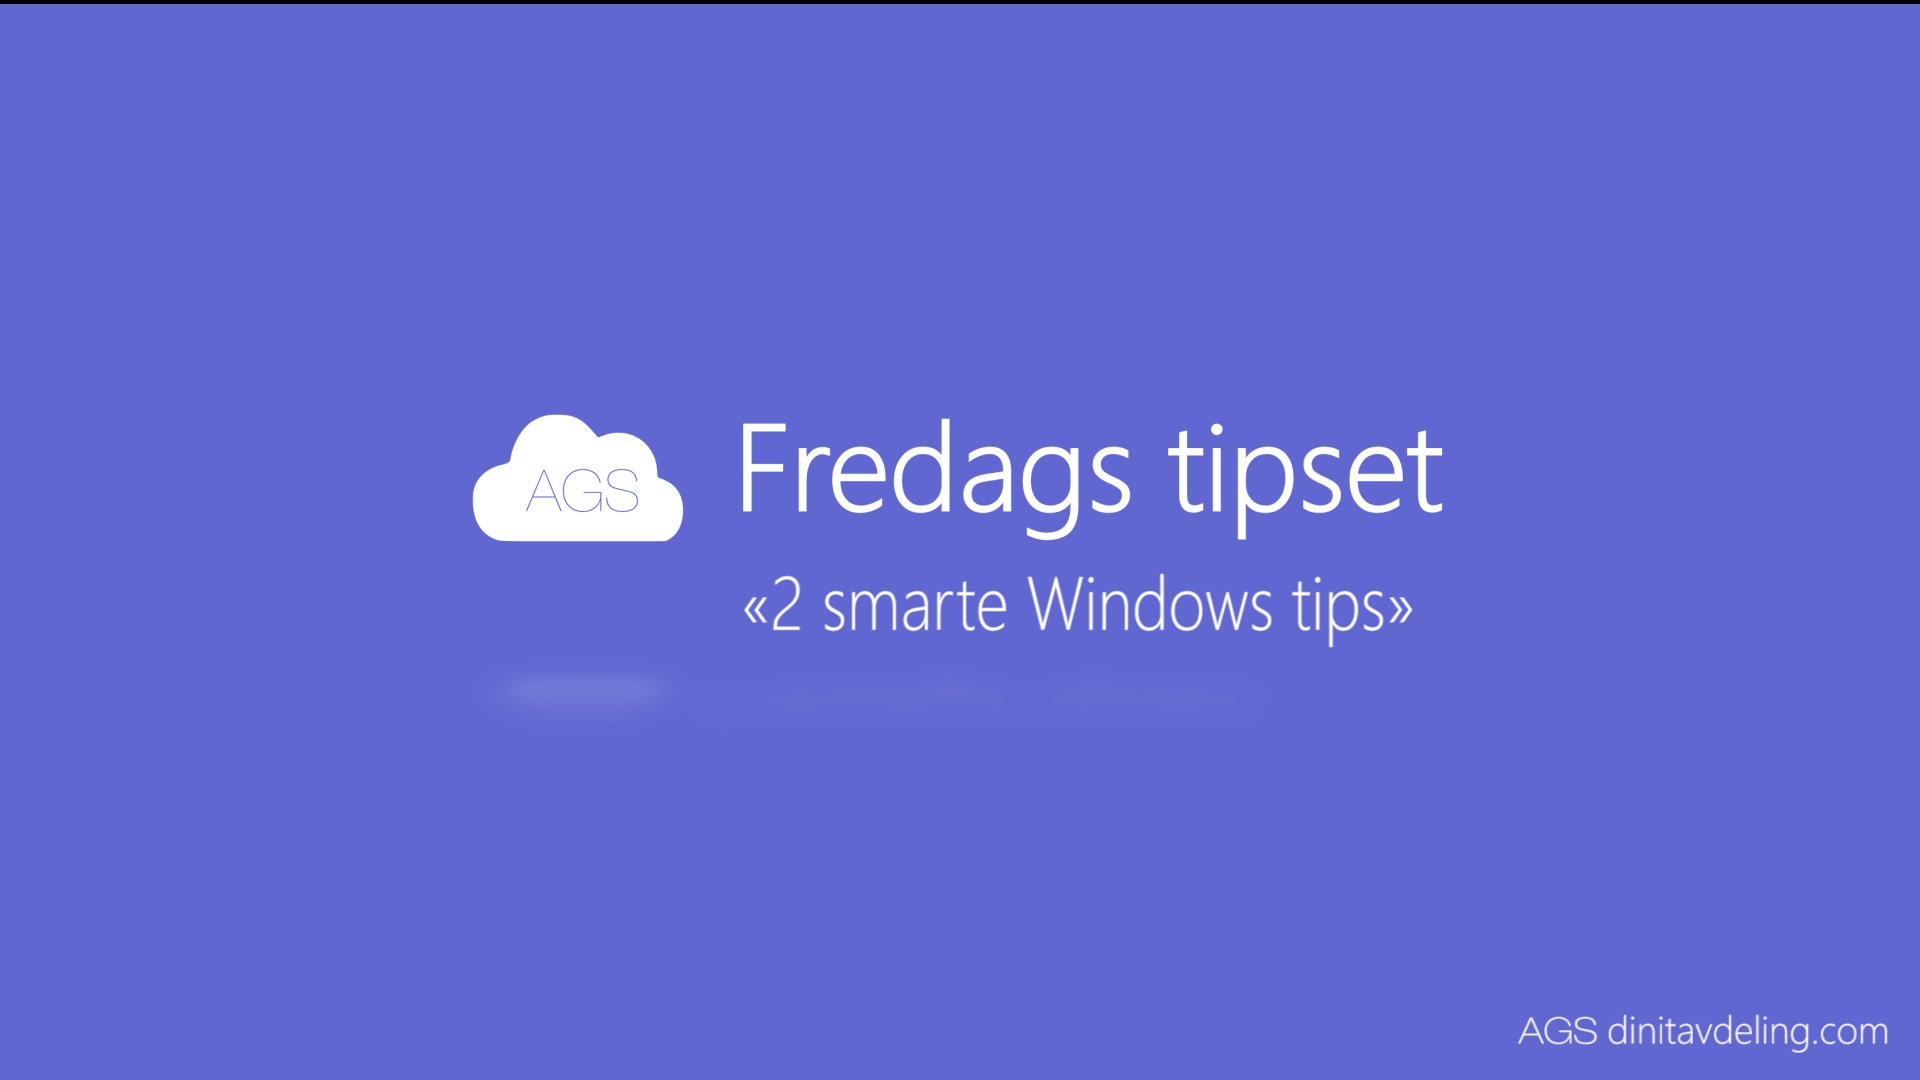 AGS Fredags tipset: 2 smarte Windows tips